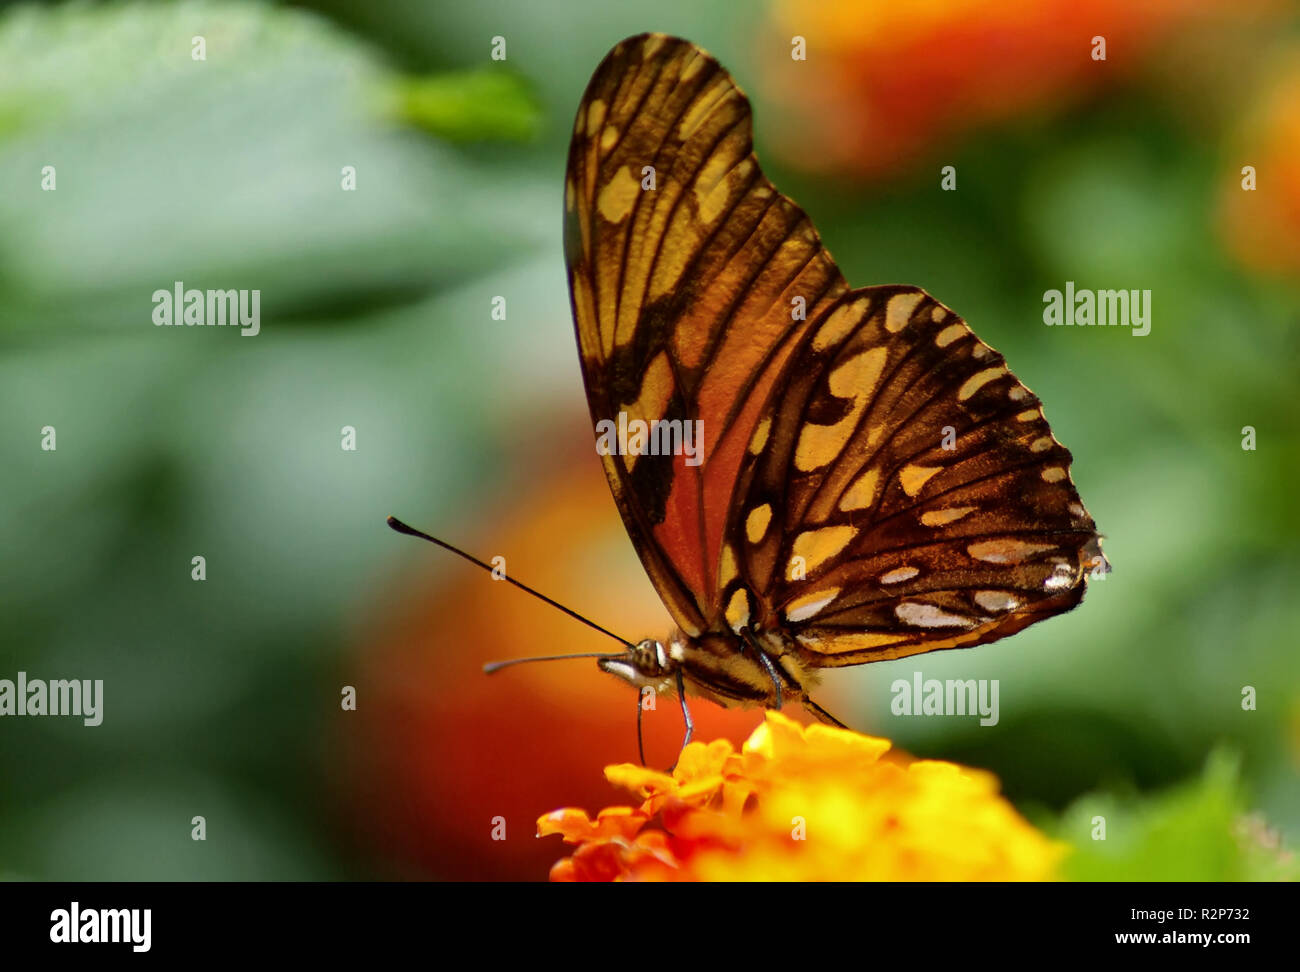 Danaus plexippus - monarch butterfly Stockfoto